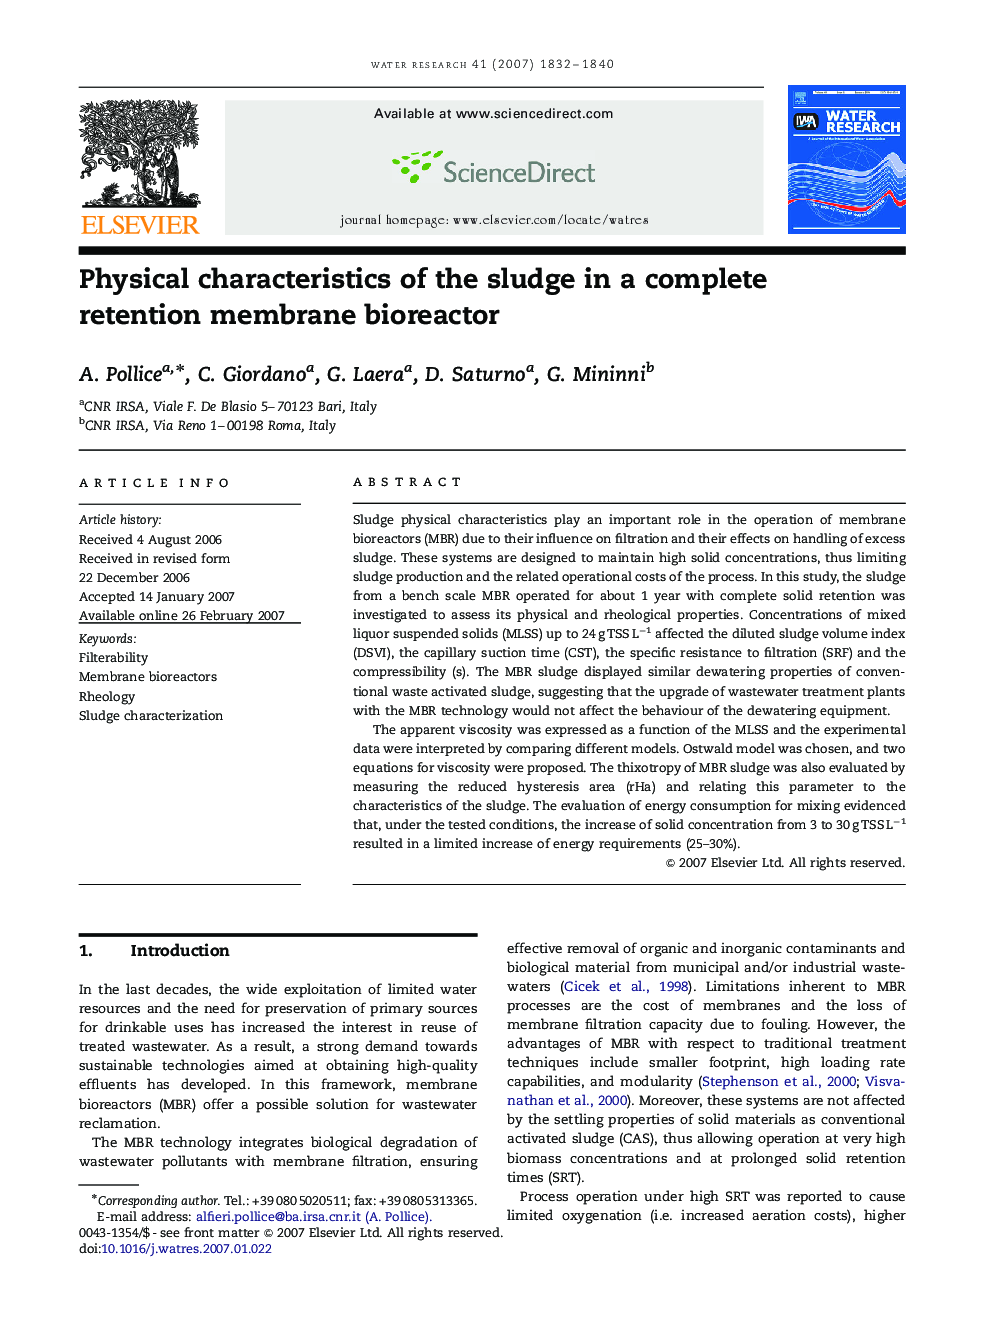 Physical characteristics of the sludge in a complete retention membrane bioreactor